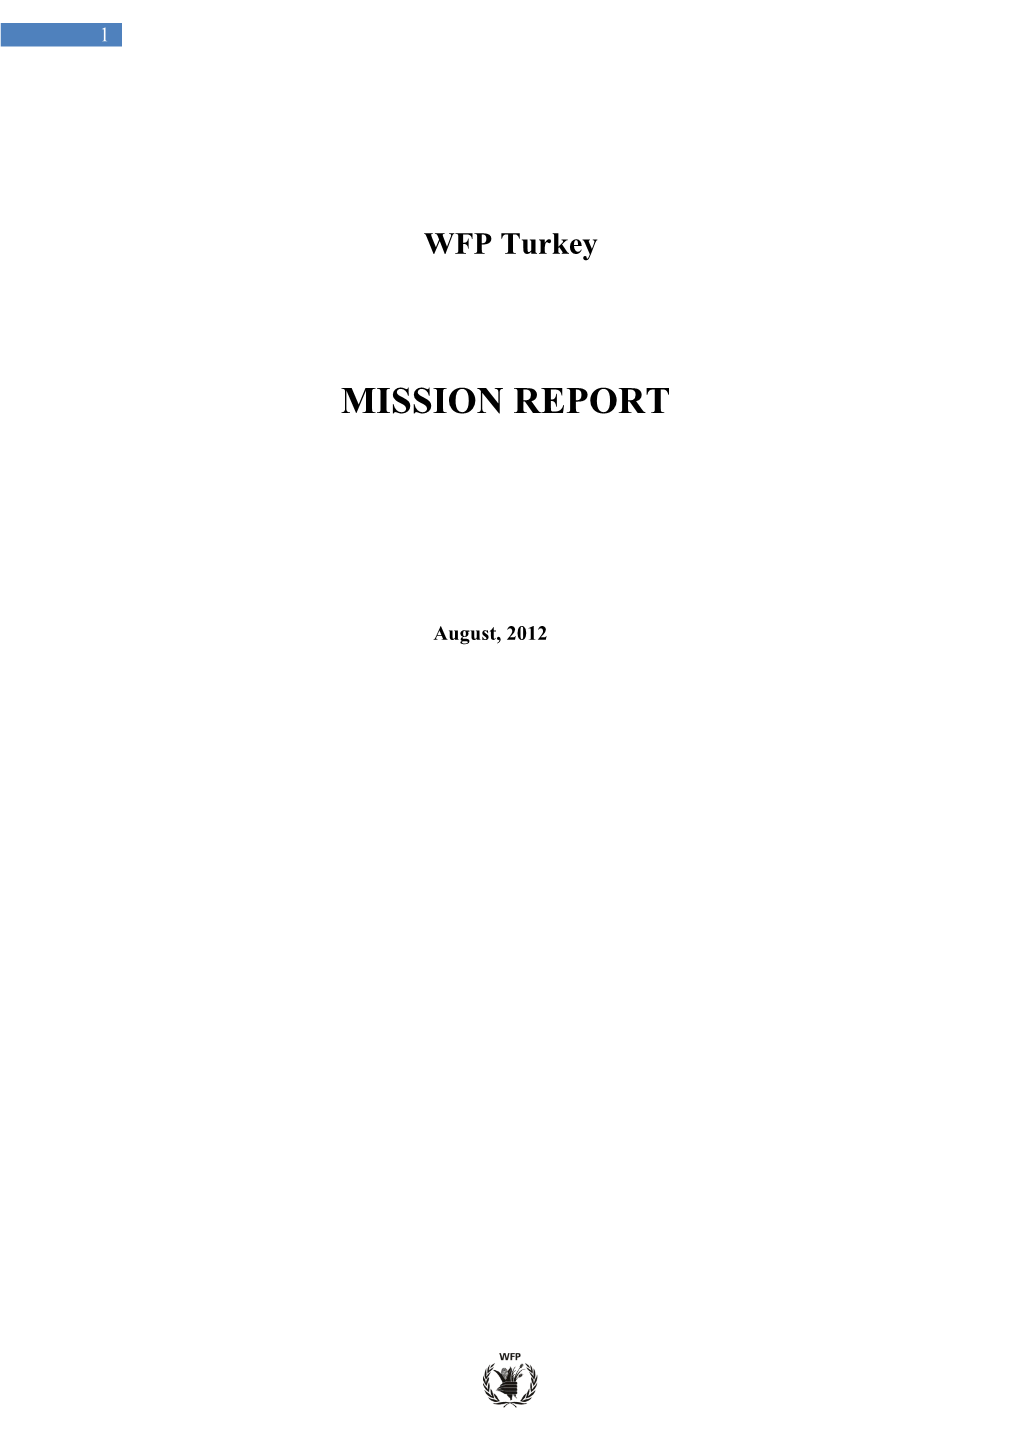 WFP Somalia C&V Project Document